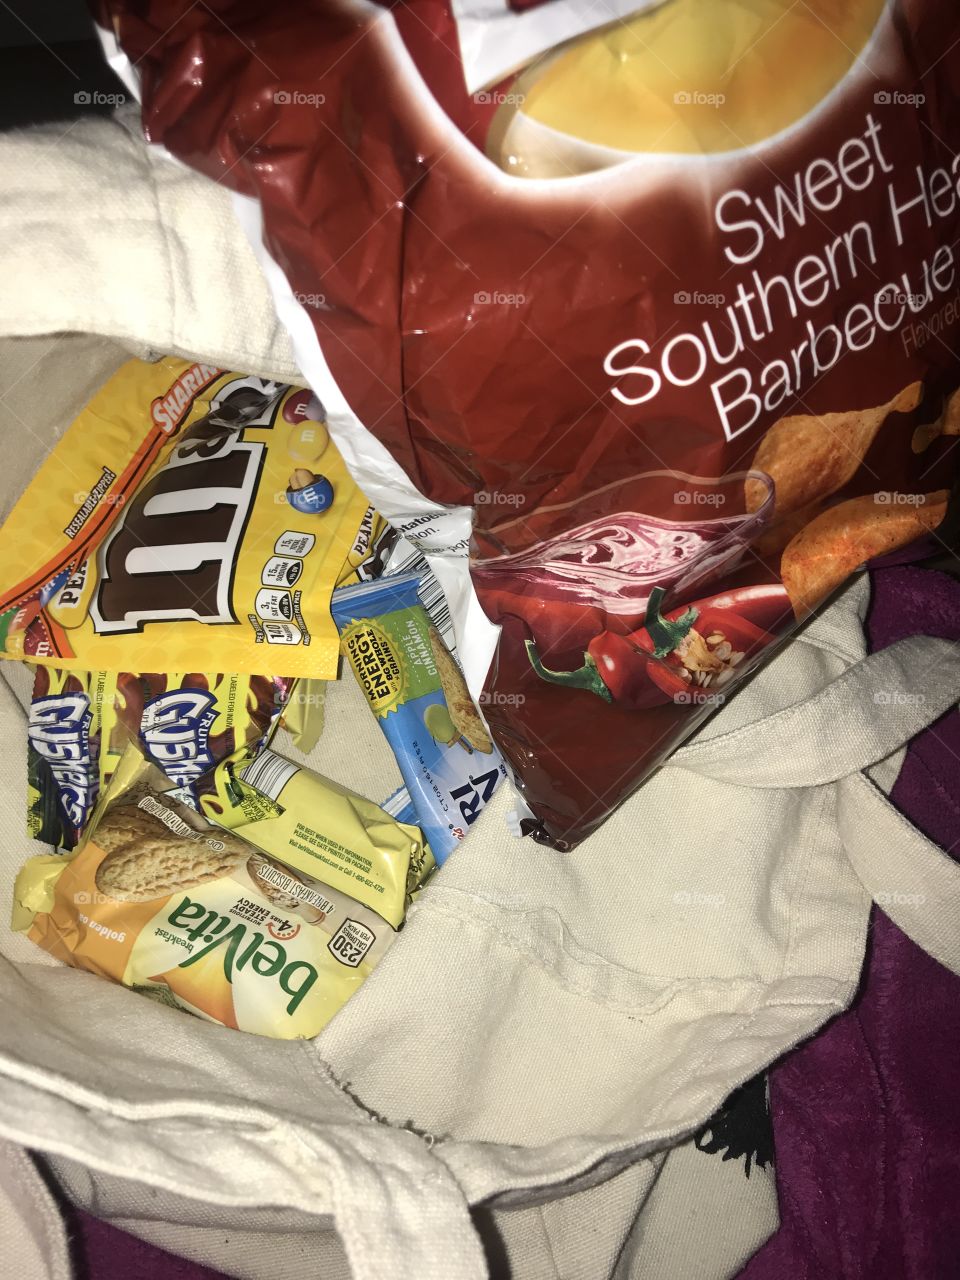 My snack bag 😂